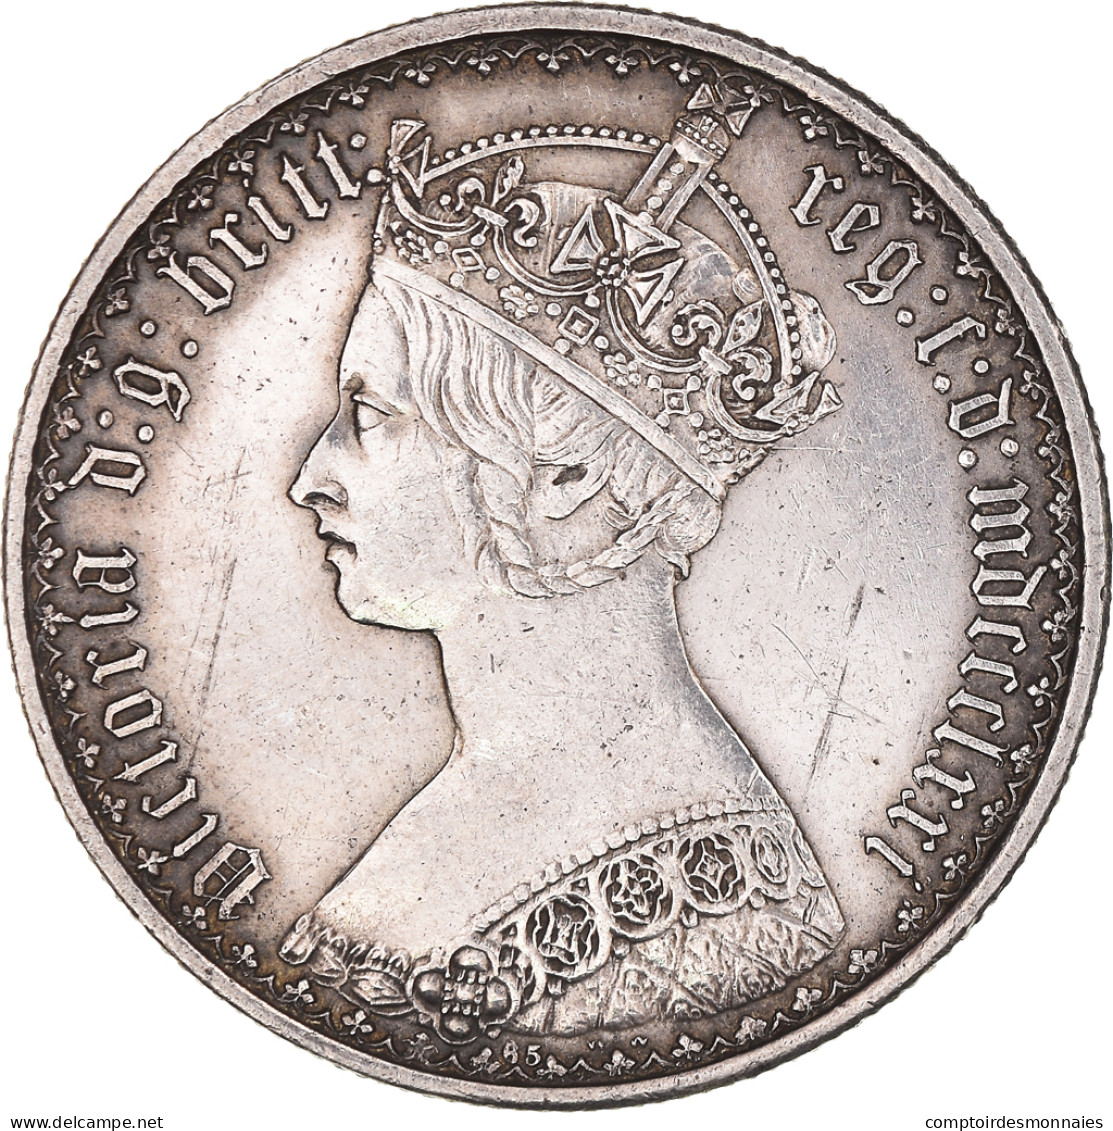 Monnaie, Grande-Bretagne, Victoria, Gothic, Florin, Two Shillings, 1871 - J. 1 Florin / 2 Schilling